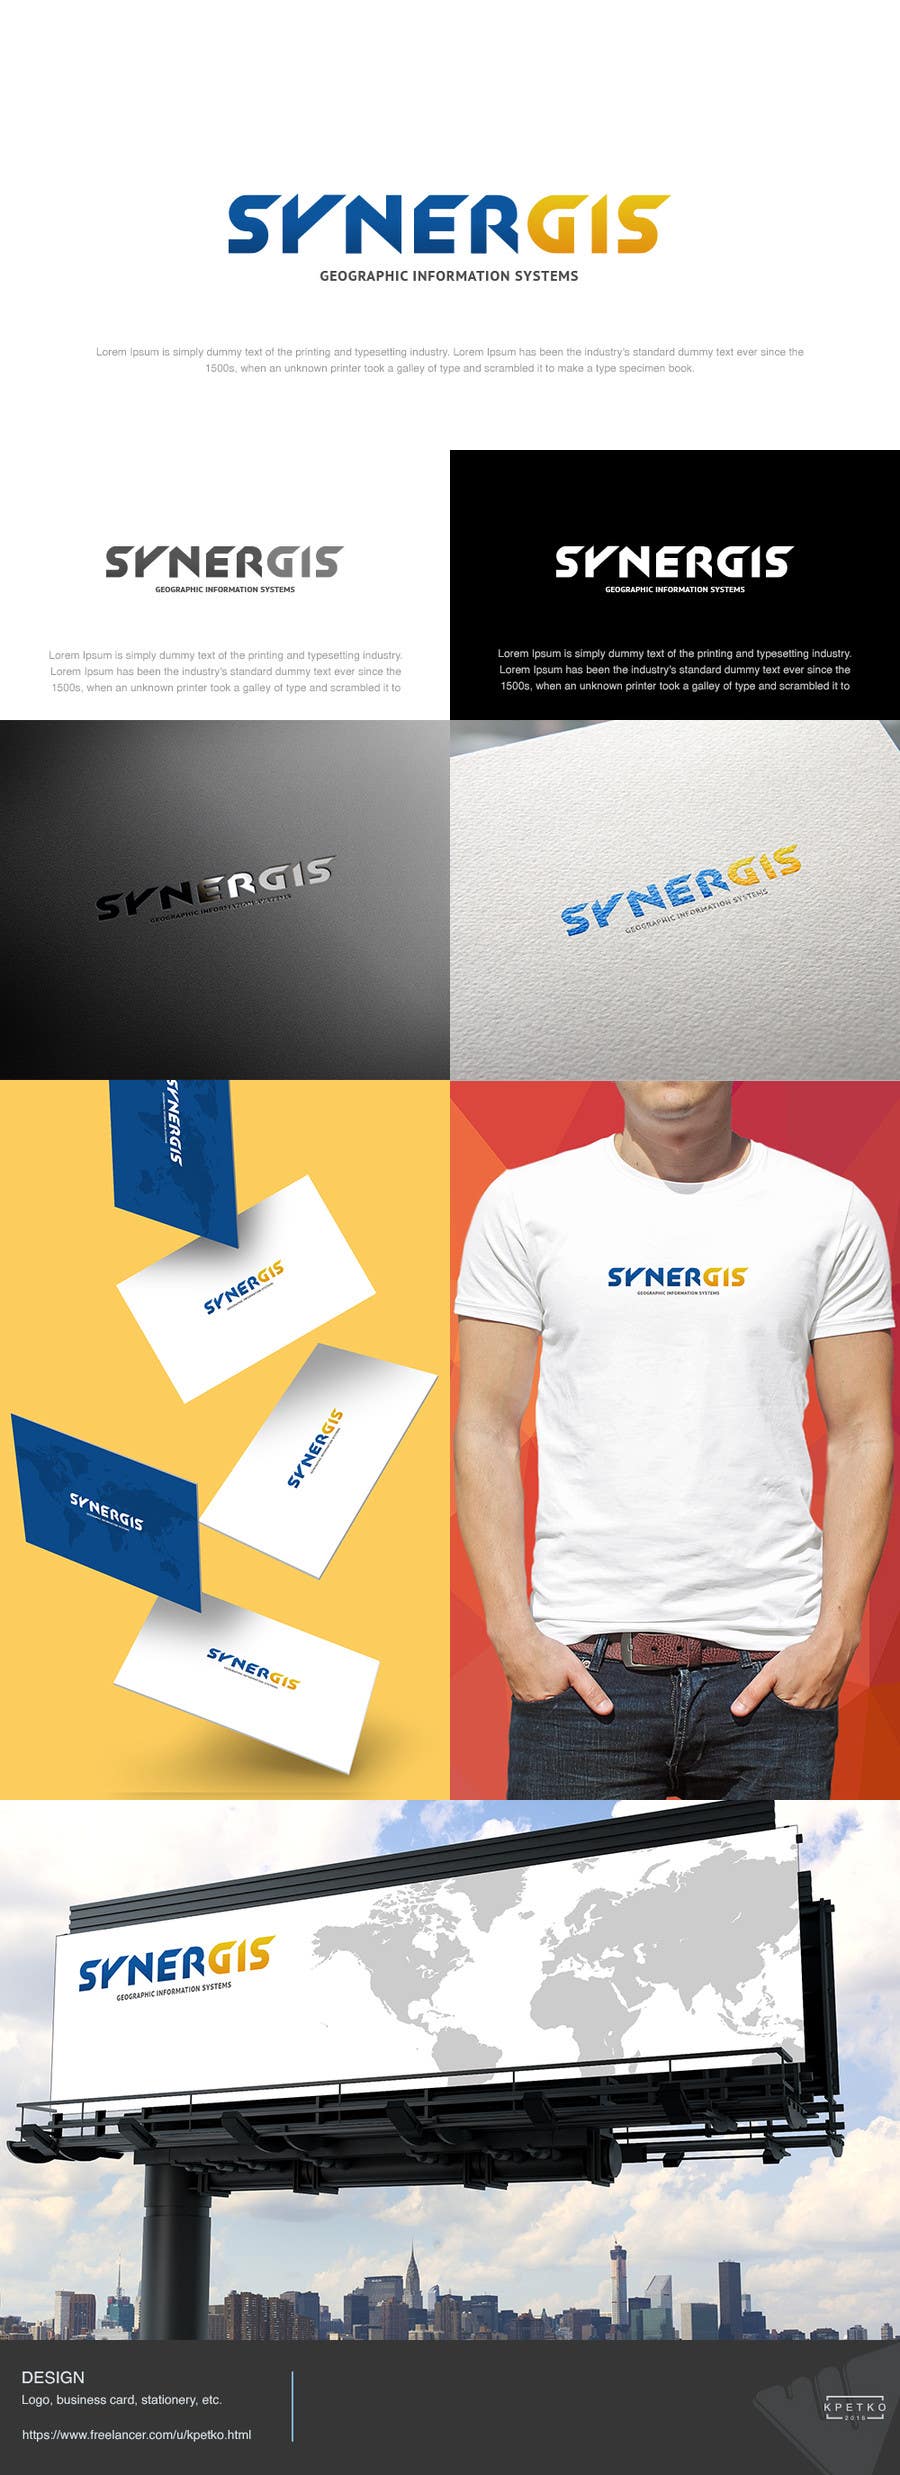 Contest Entry #11 for                                                 Design a logo for SynerGIS
                                            